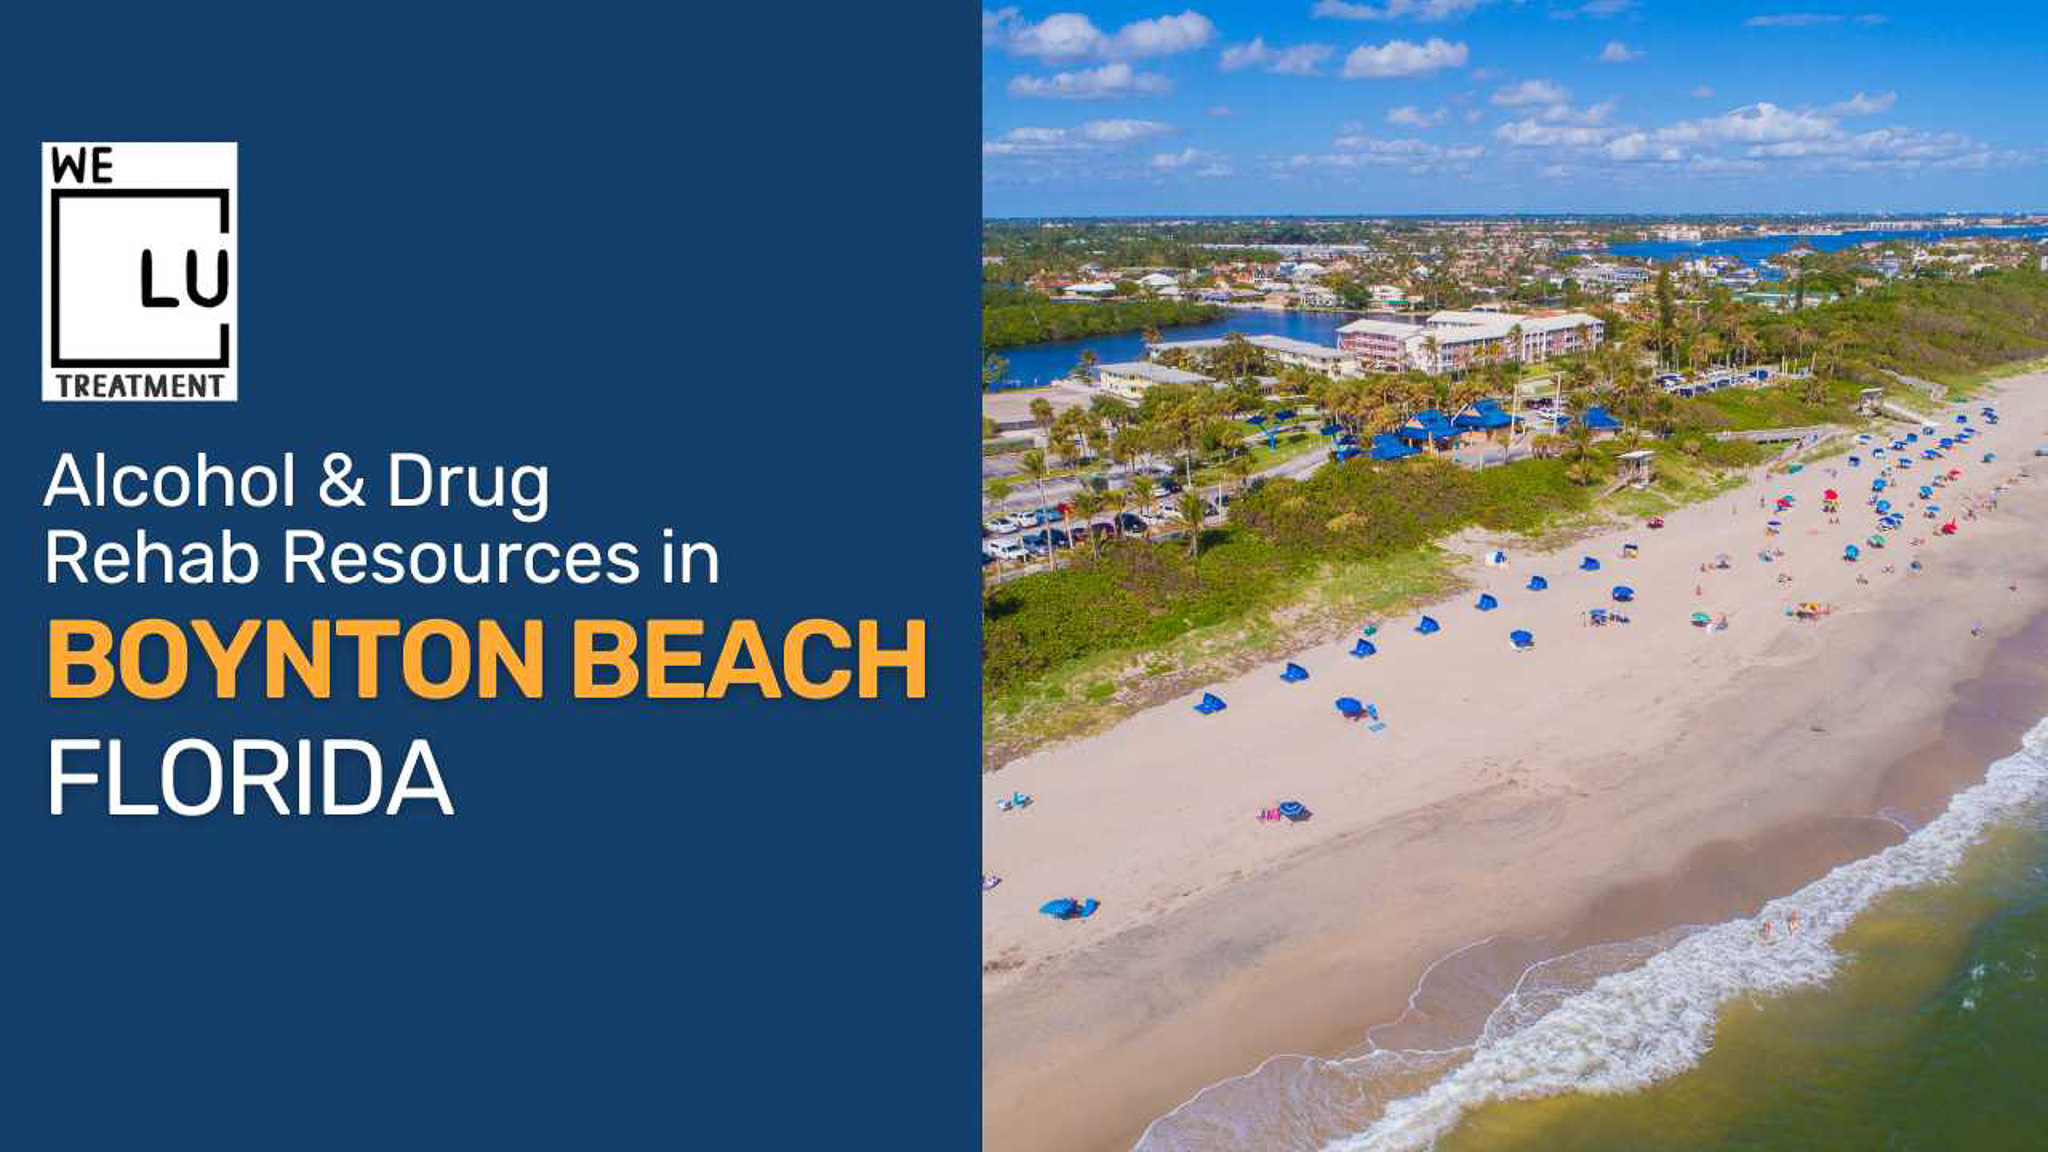 Boynton Beach FL (SA) We Level Up treatment center for drug and alcohol rehab detox and mental health services - Image 1